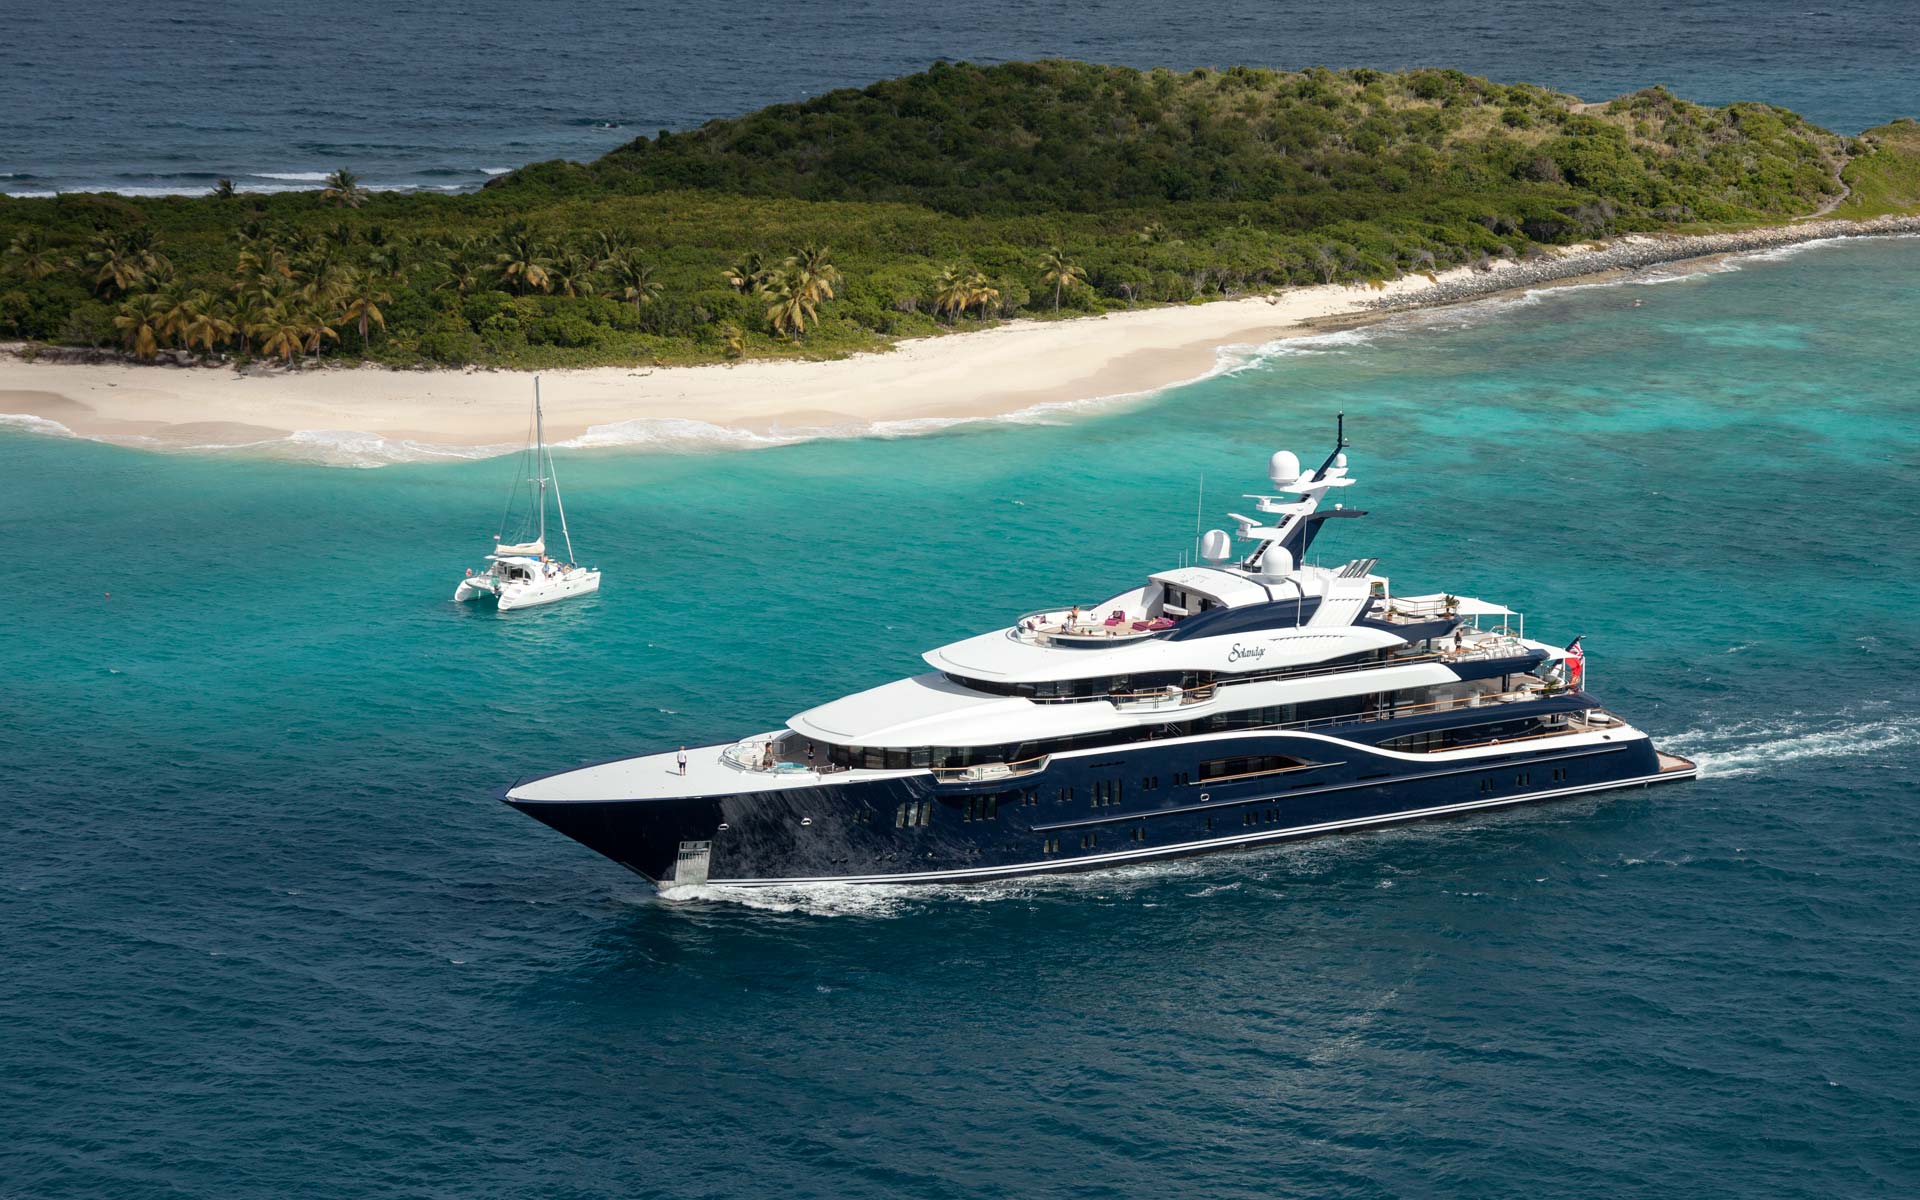 Yacht Solandge - Caribbean